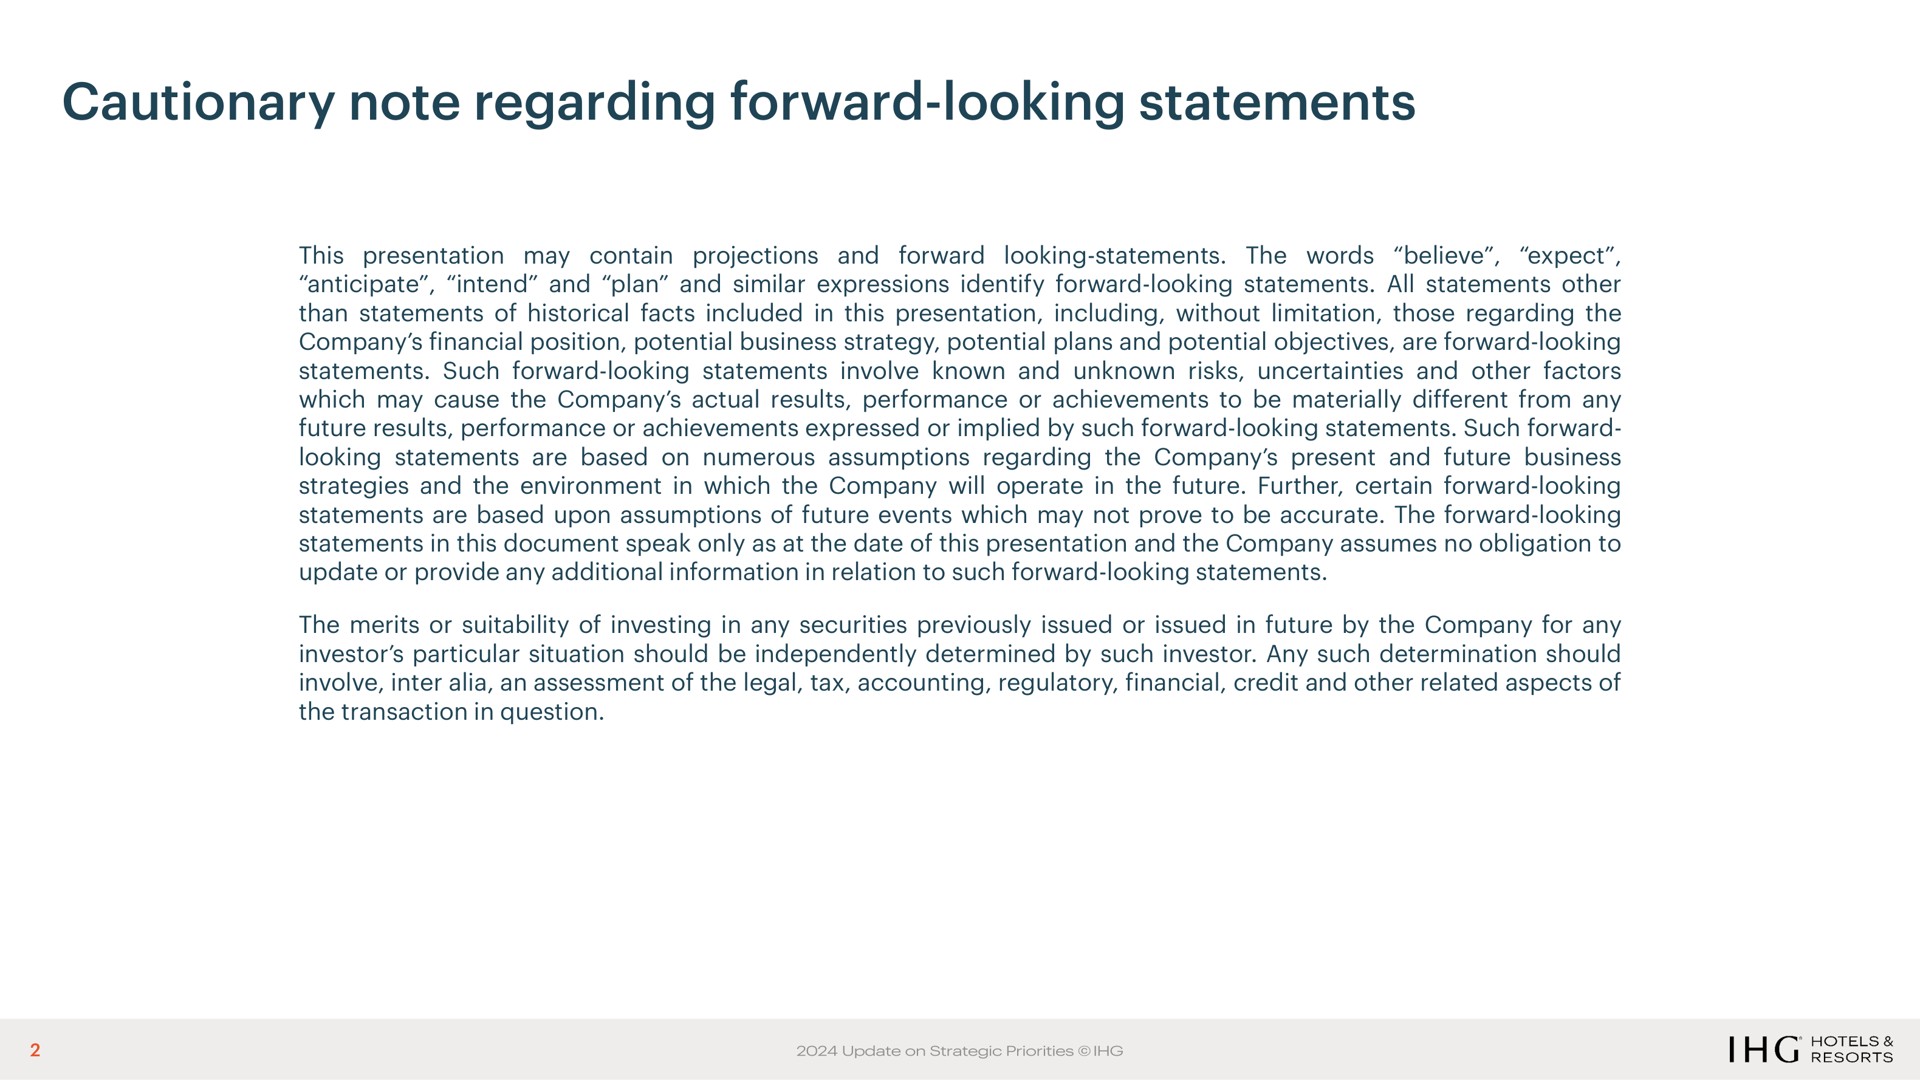 cautionary note regarding forward looking statements | IHG Hotels